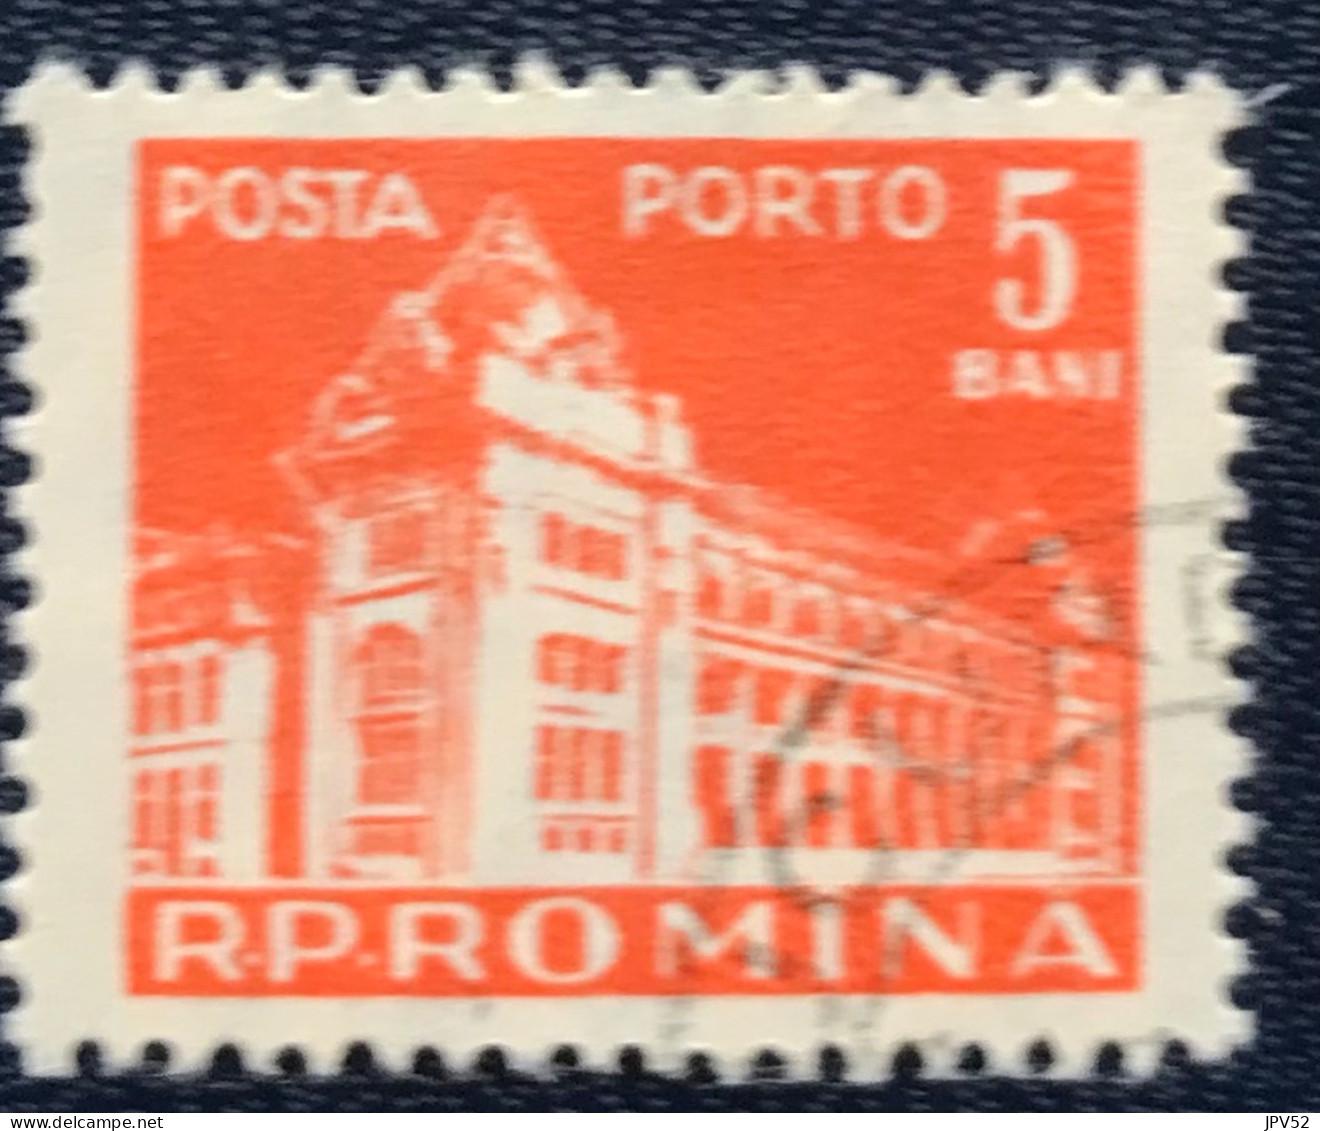 Romana - Roemenië - C14/54 - 1957 - (°)used - Michel 102 - Postkantoor - Port Dû (Taxe)